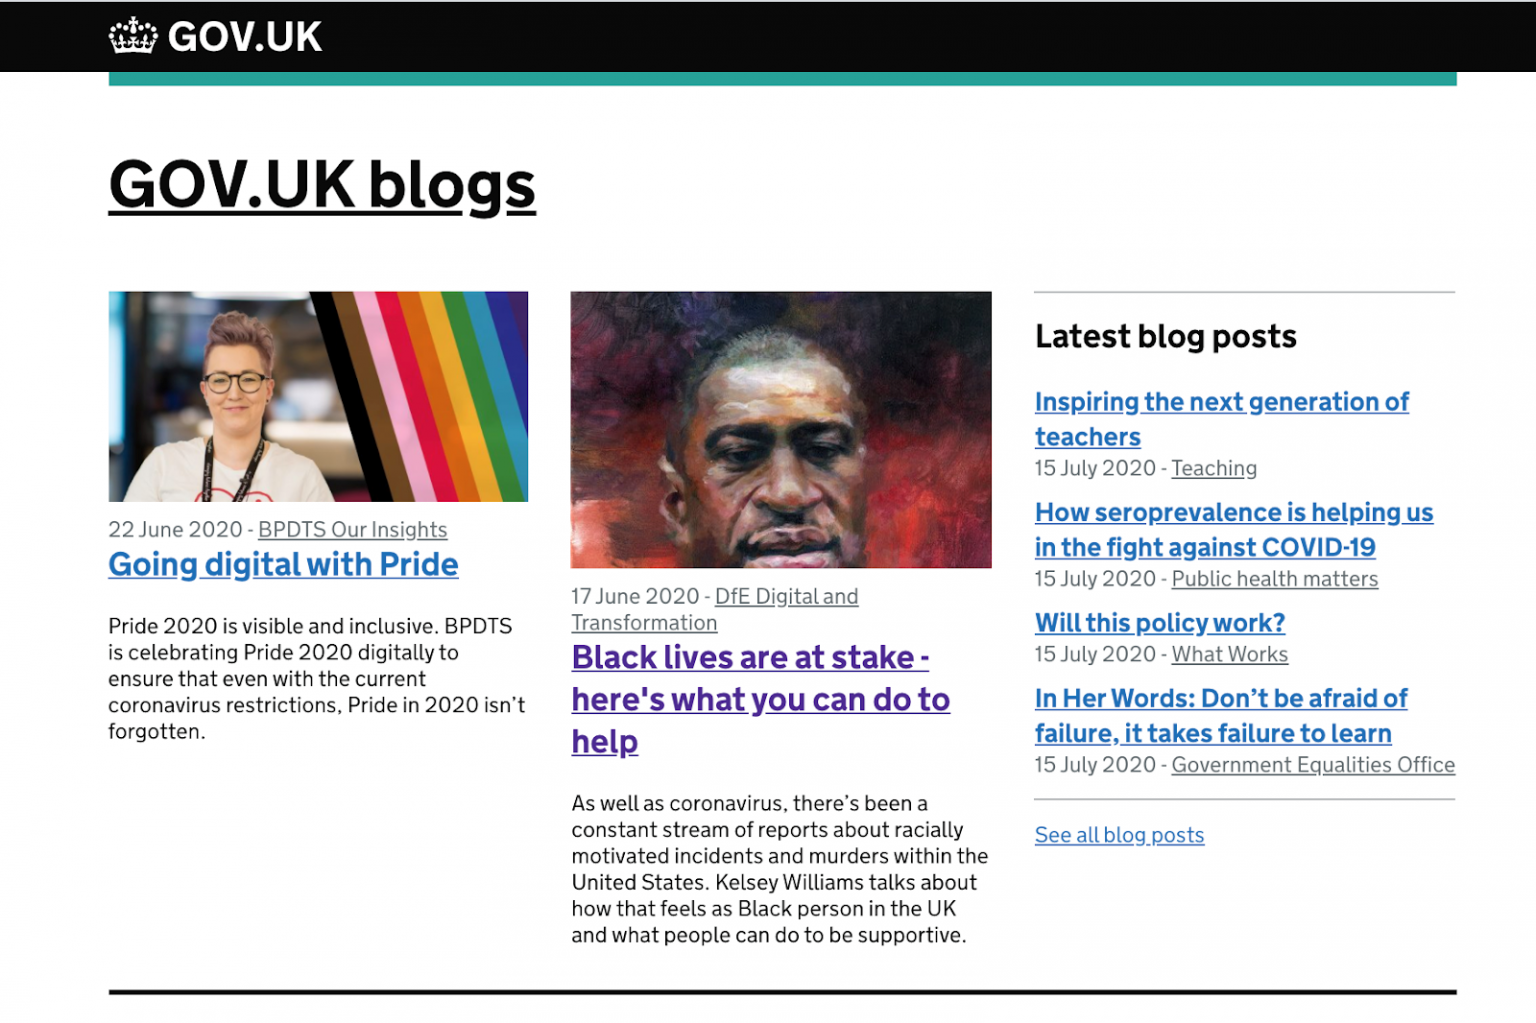 A screen shot of Kelsey Williams blog post for DfE Digital on the GOV.UK blog page